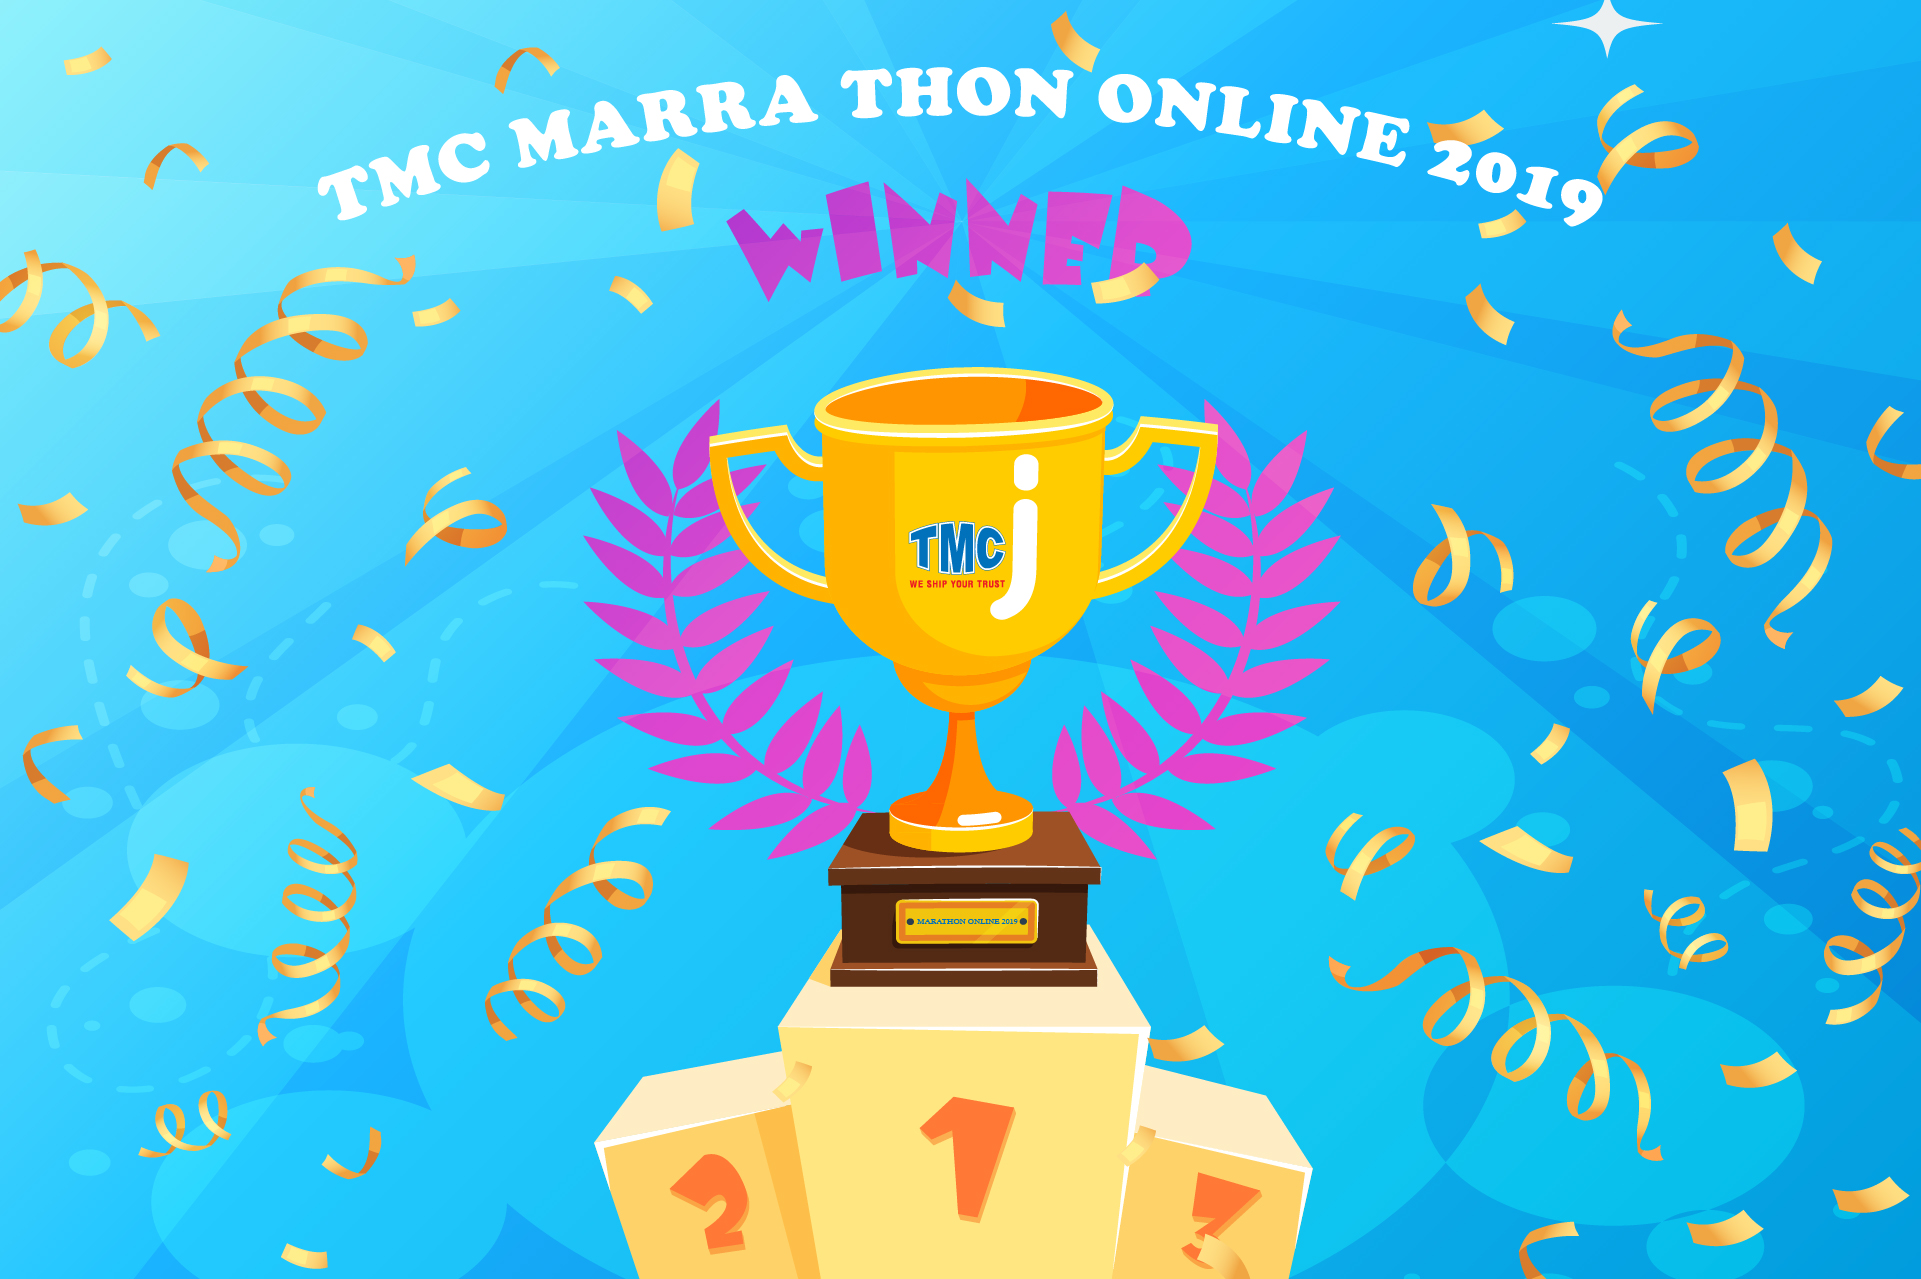 KẾT QUẢ CUỘC THI “TMC MARATHON ONLINE 2019”